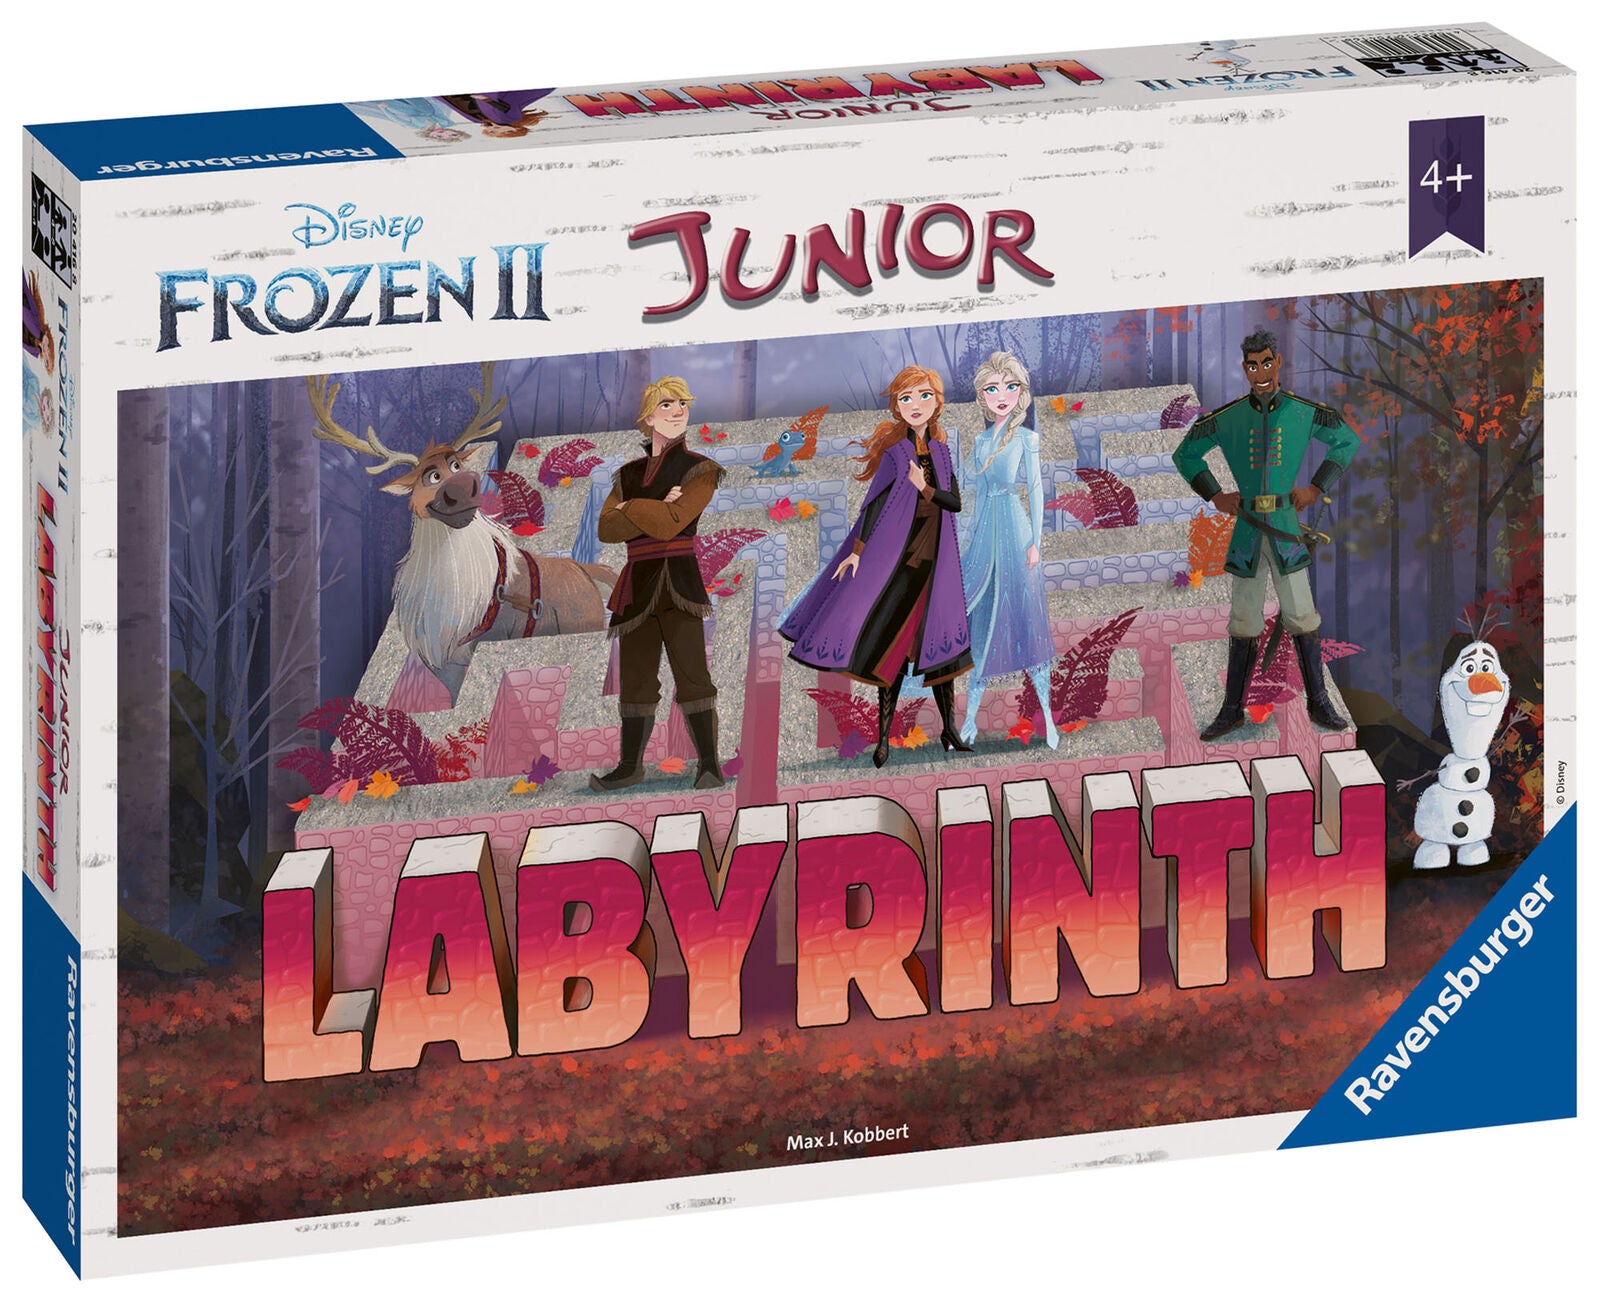 20416 Ravensburger Disney Frozen 2 Junior Labyrinth Board Game Age 4 Years+